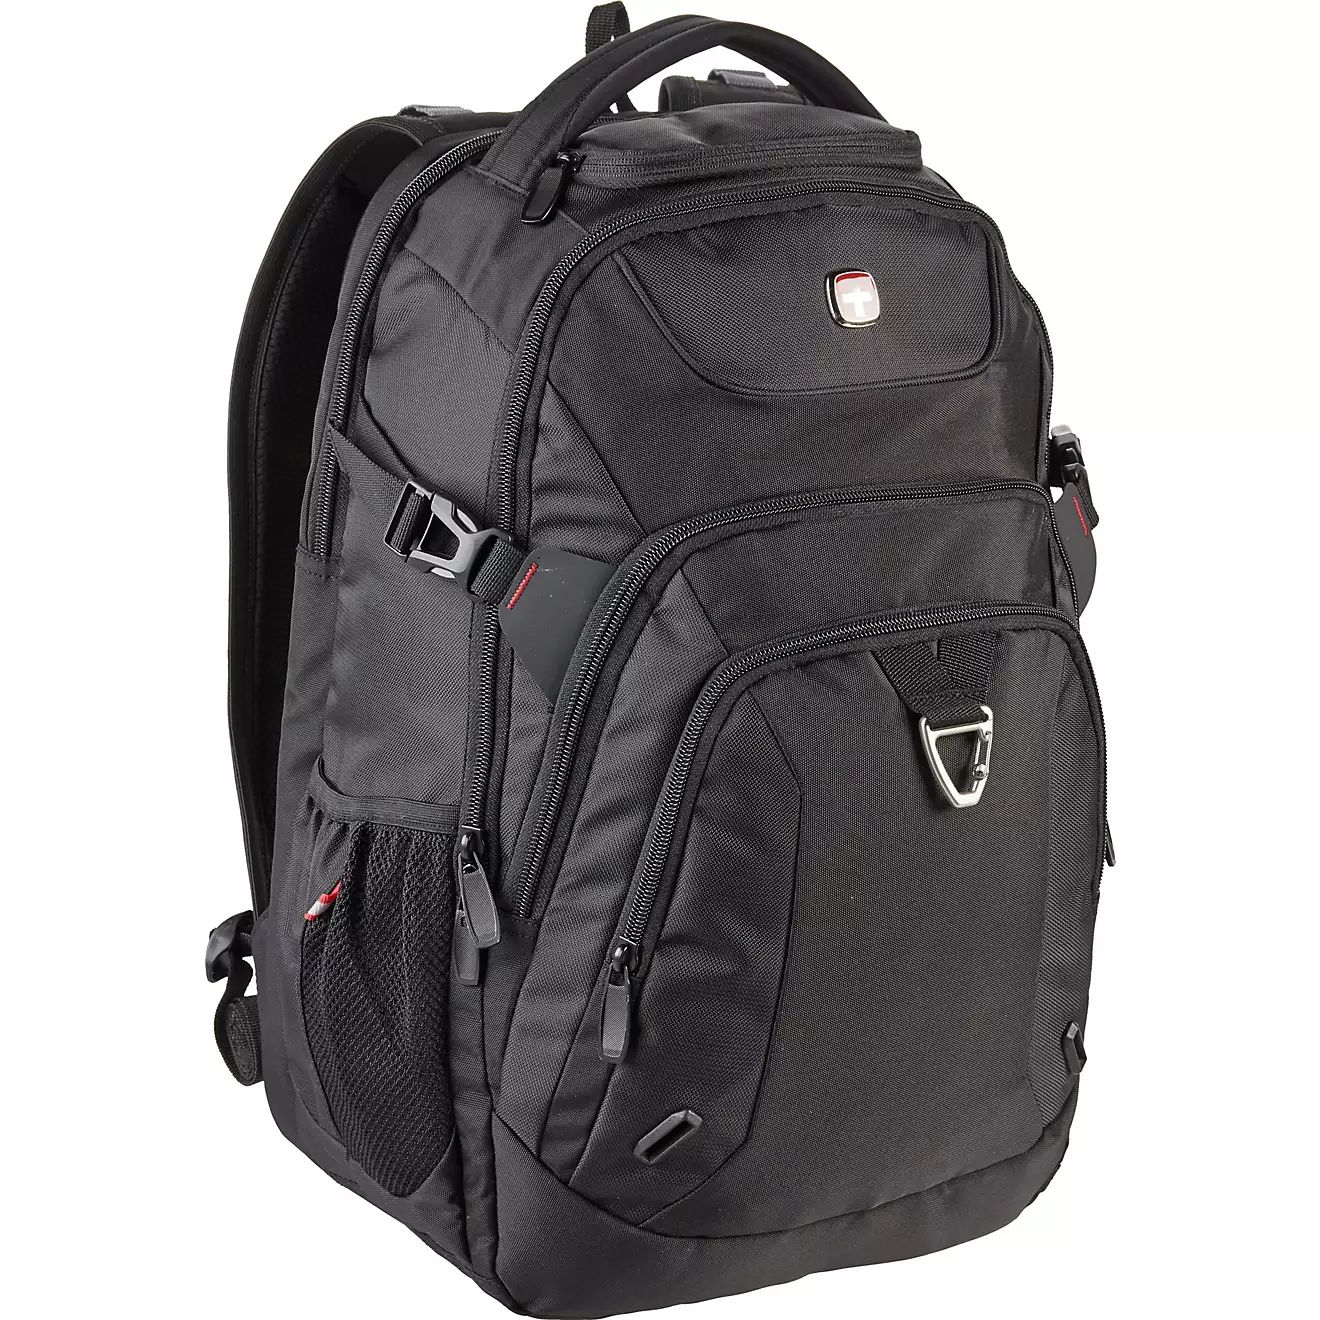 SwissGear 3990 Laptop Backpack | Academy Sports + Outdoors